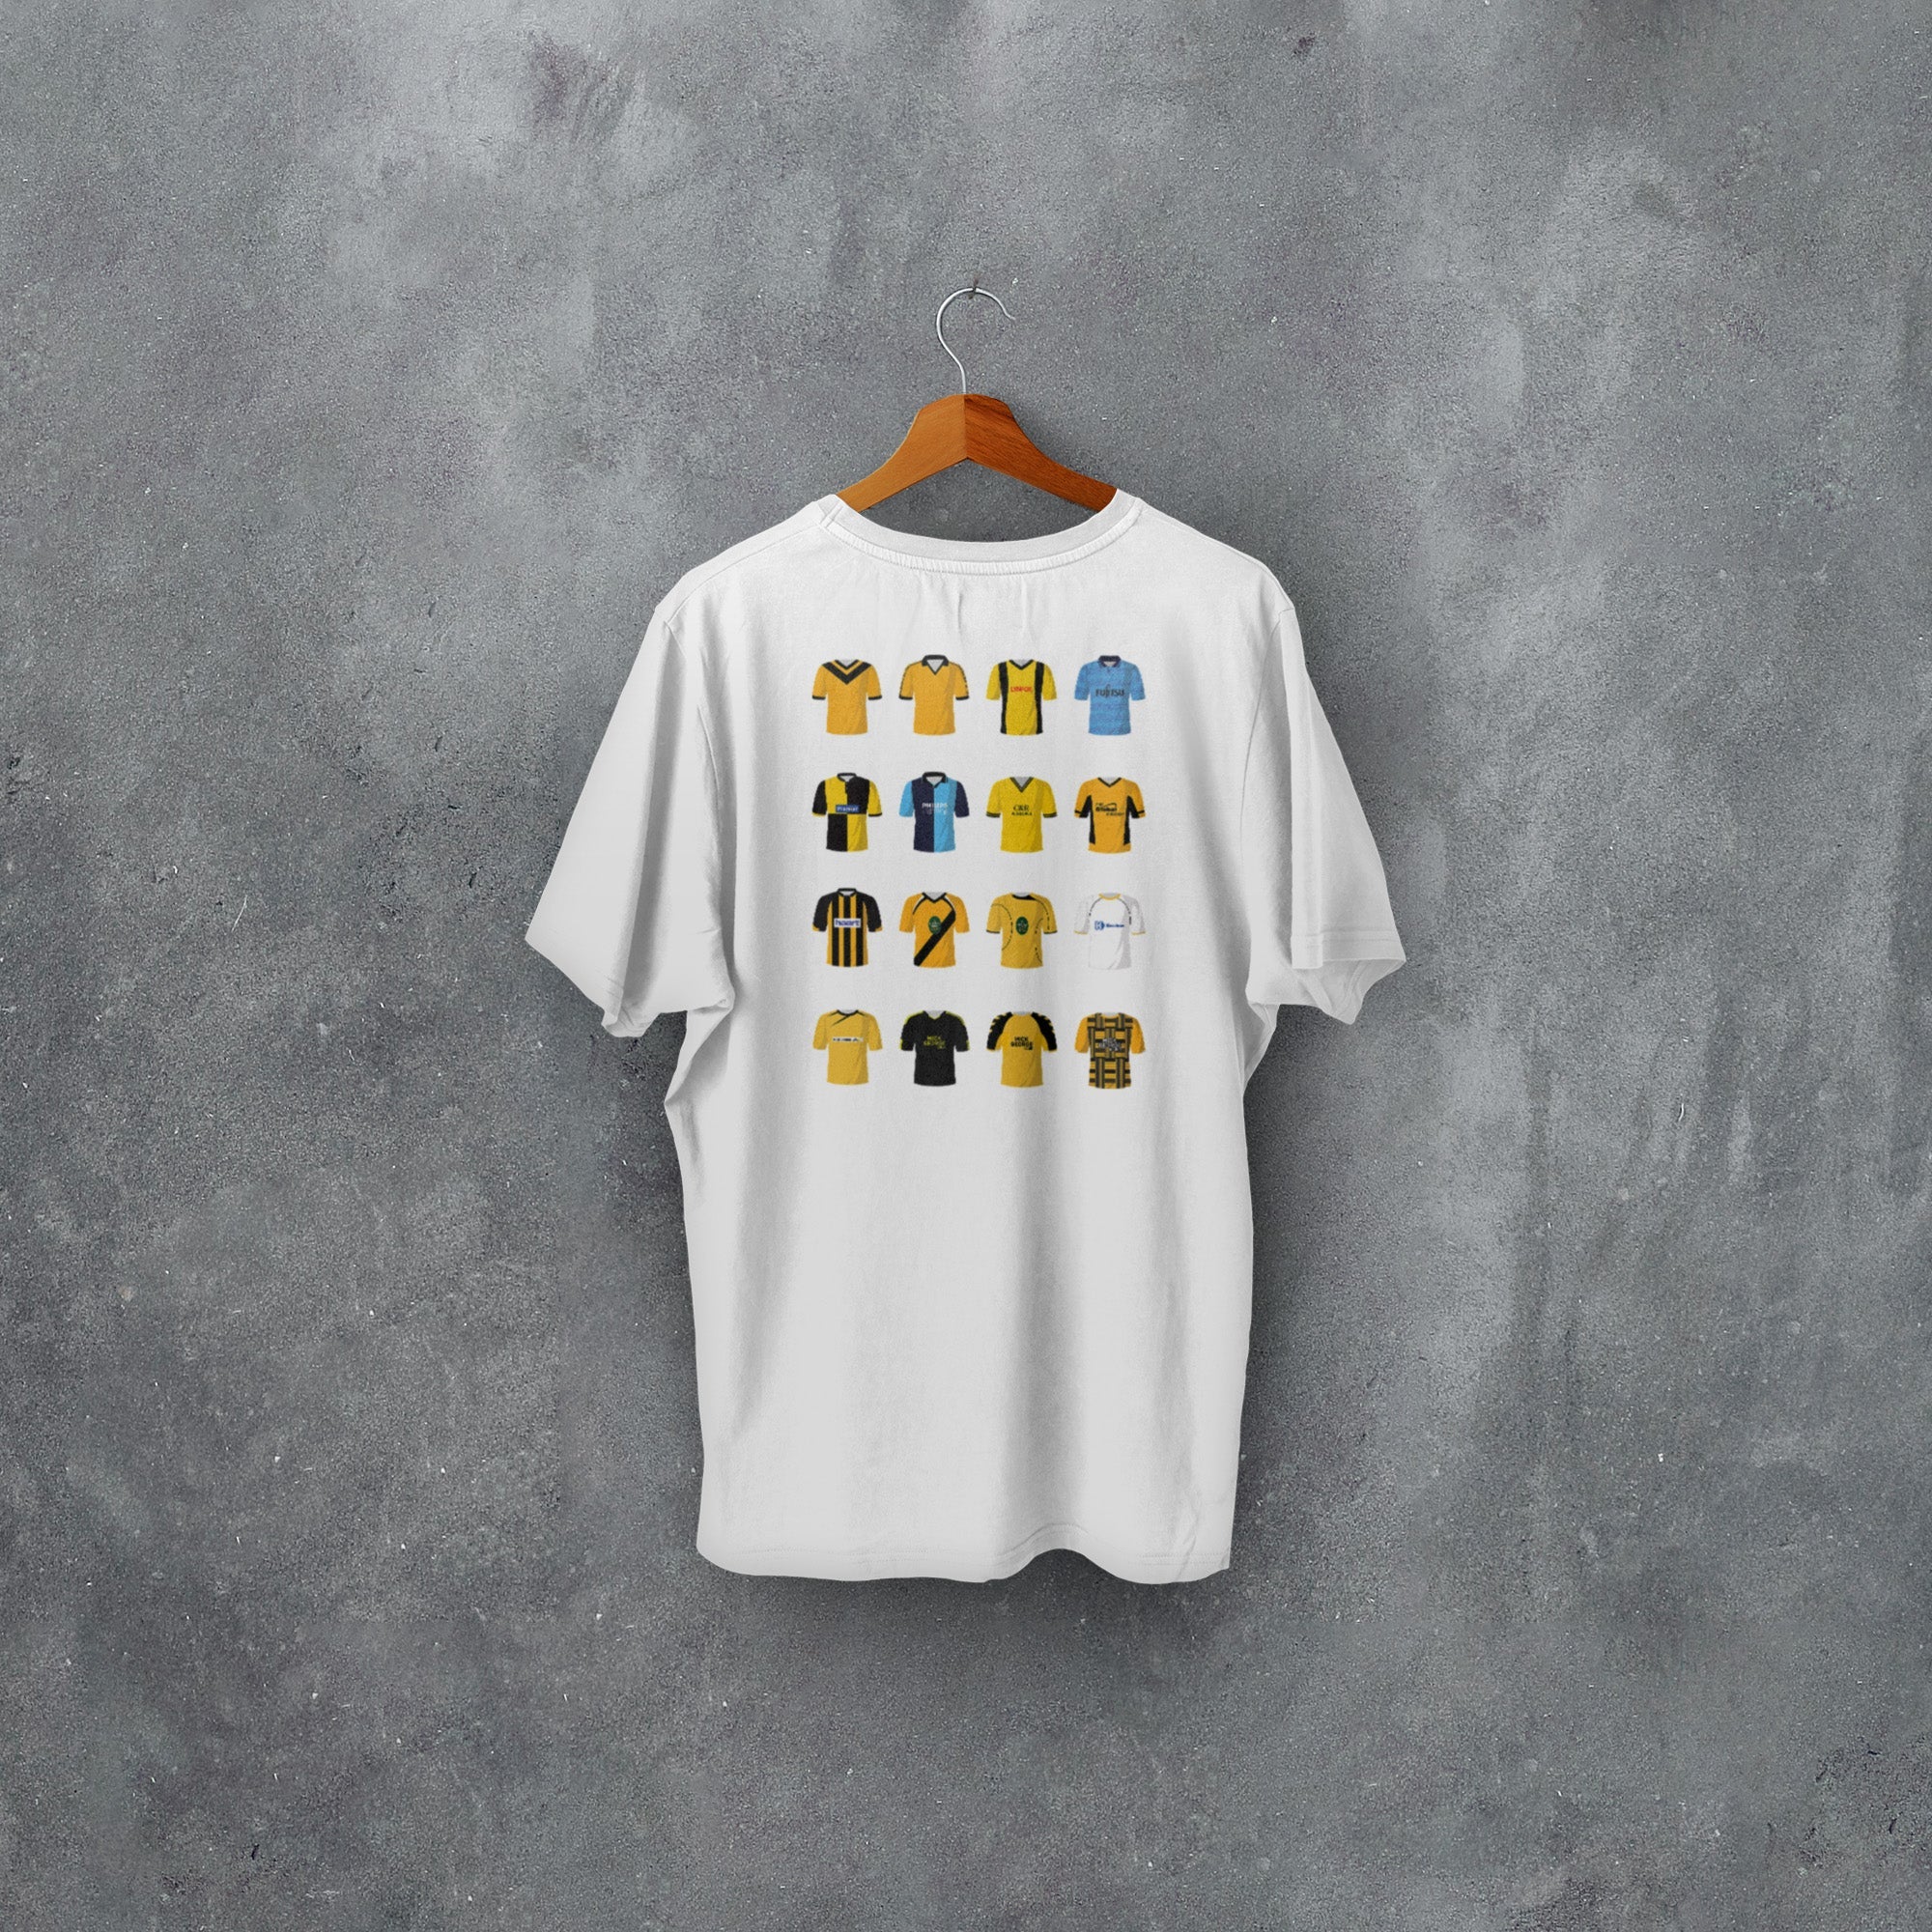 Cambridge Classic Kits Football T-Shirt